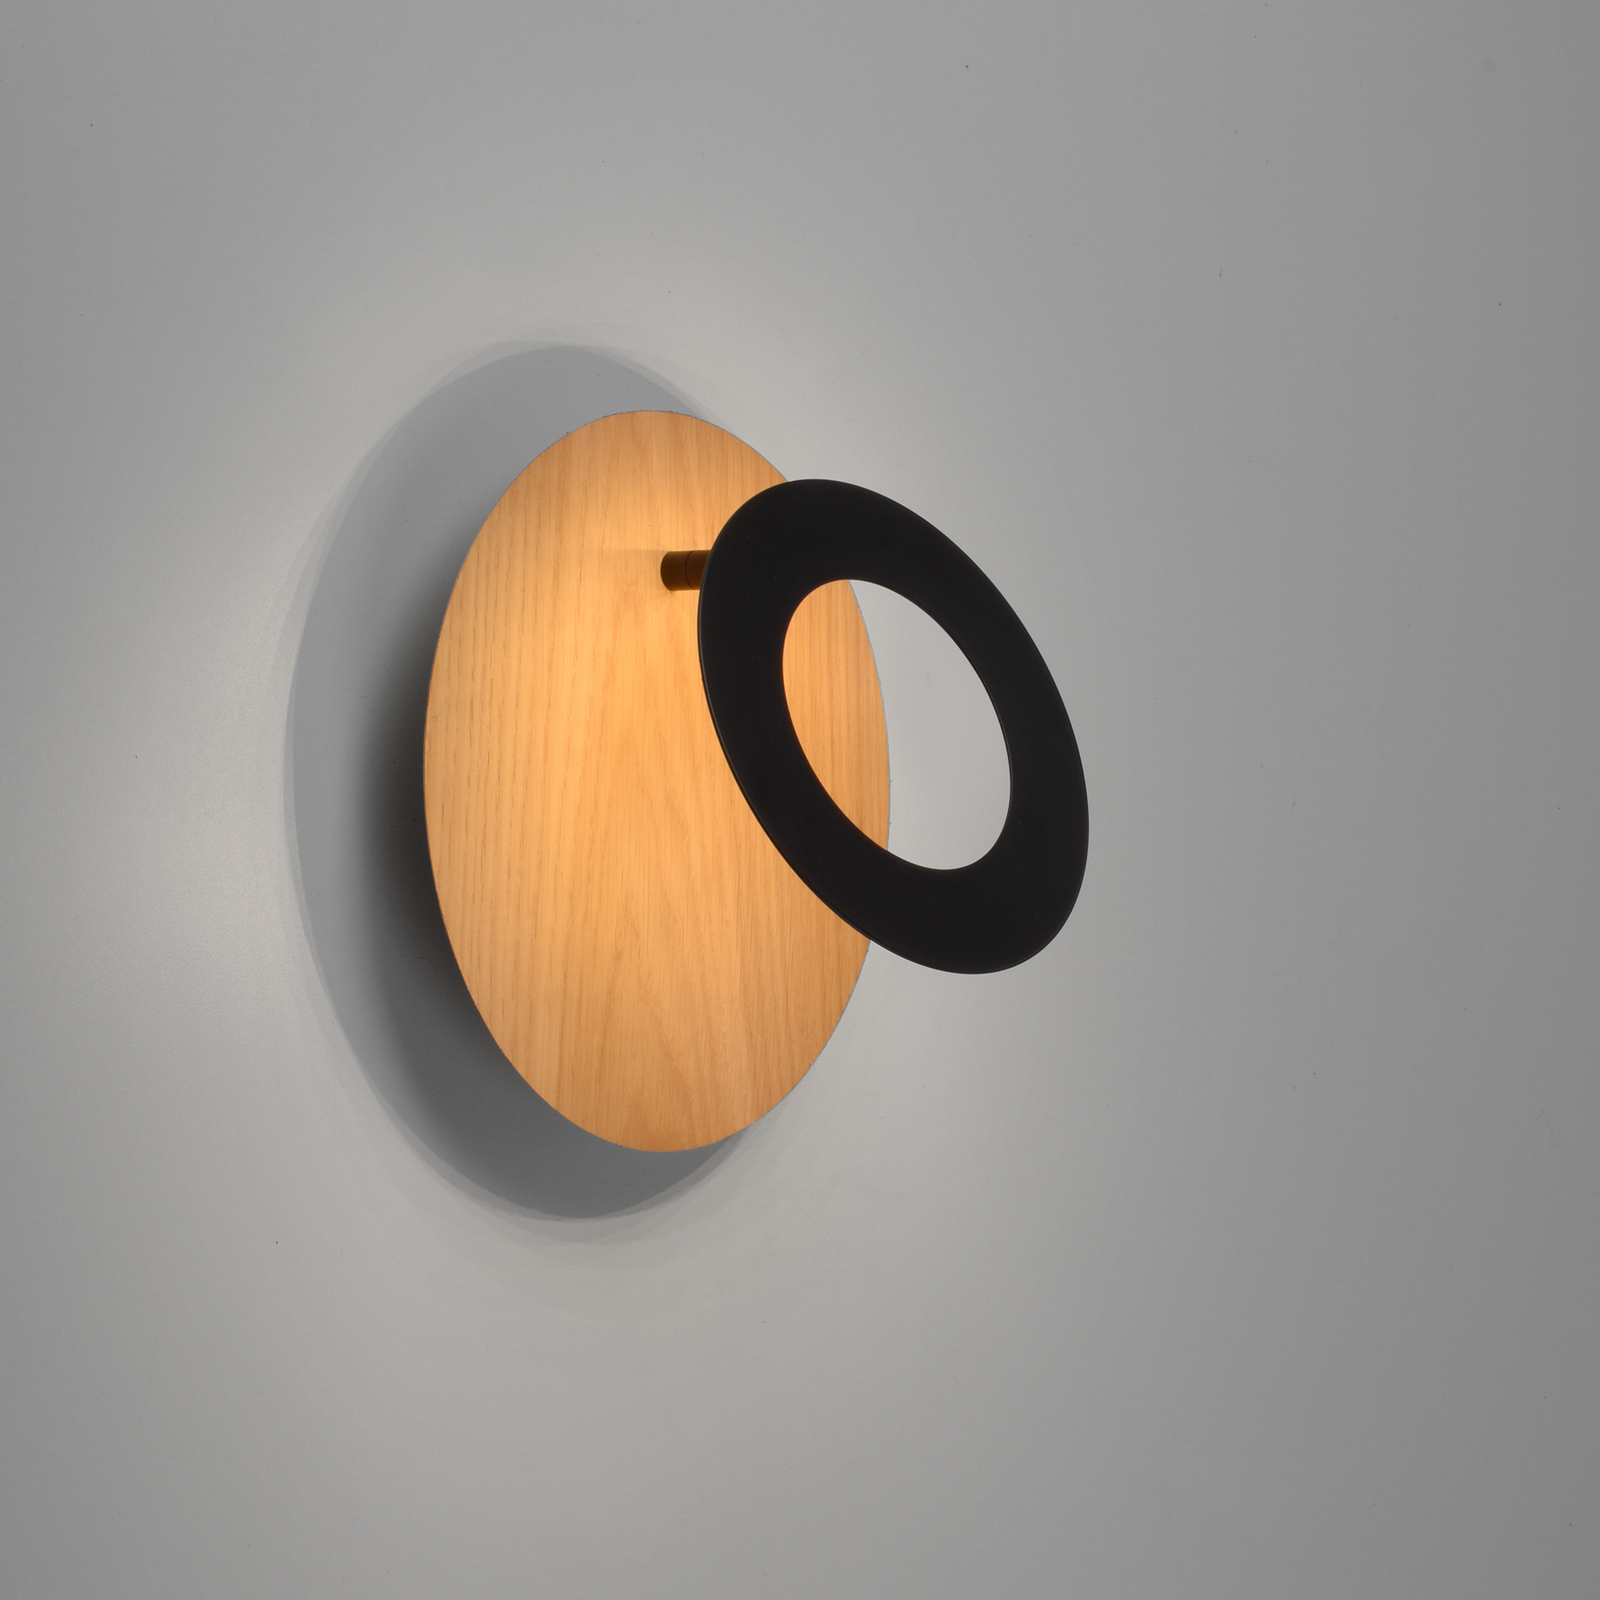 Paul Neuhaus Nevis LED wall light made of wood, round